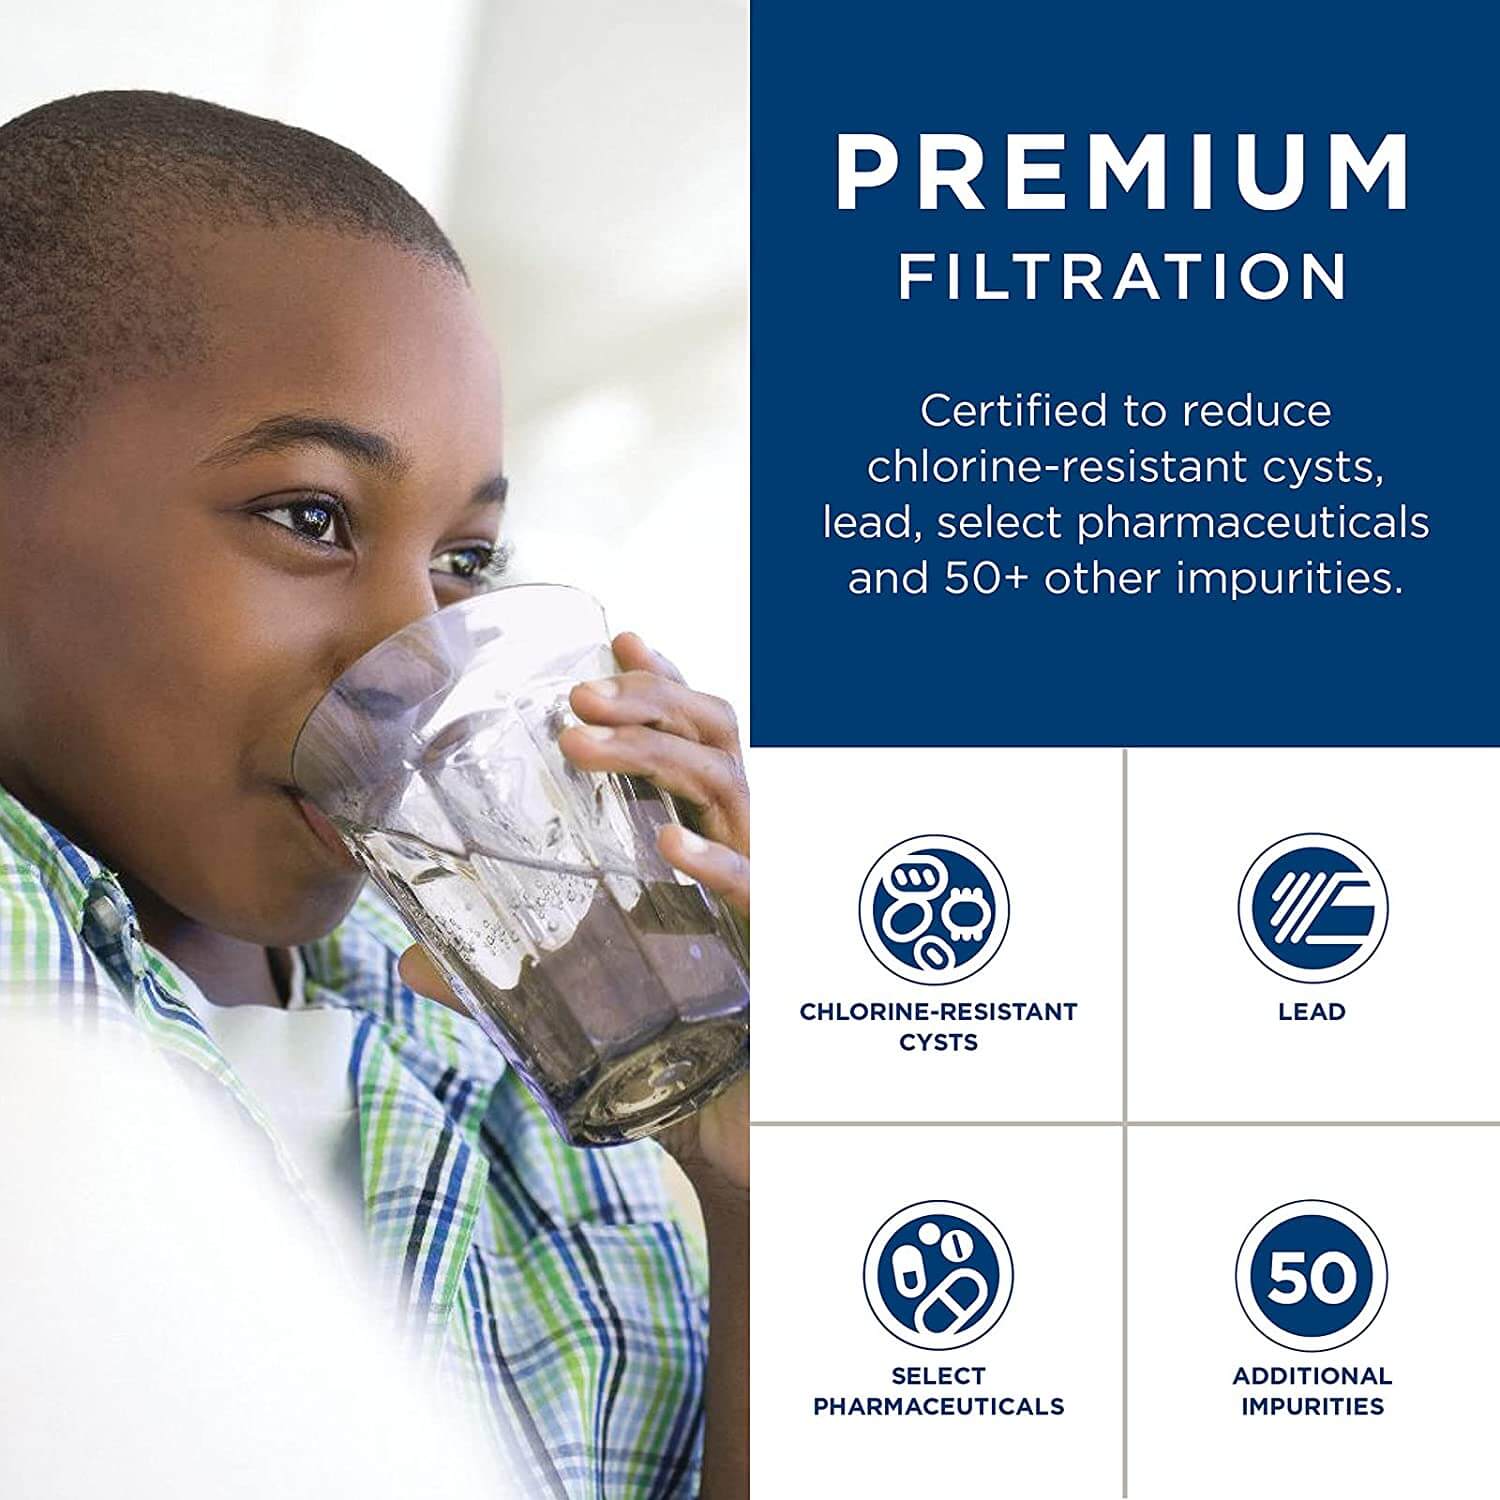 GE MSWF premium filtration